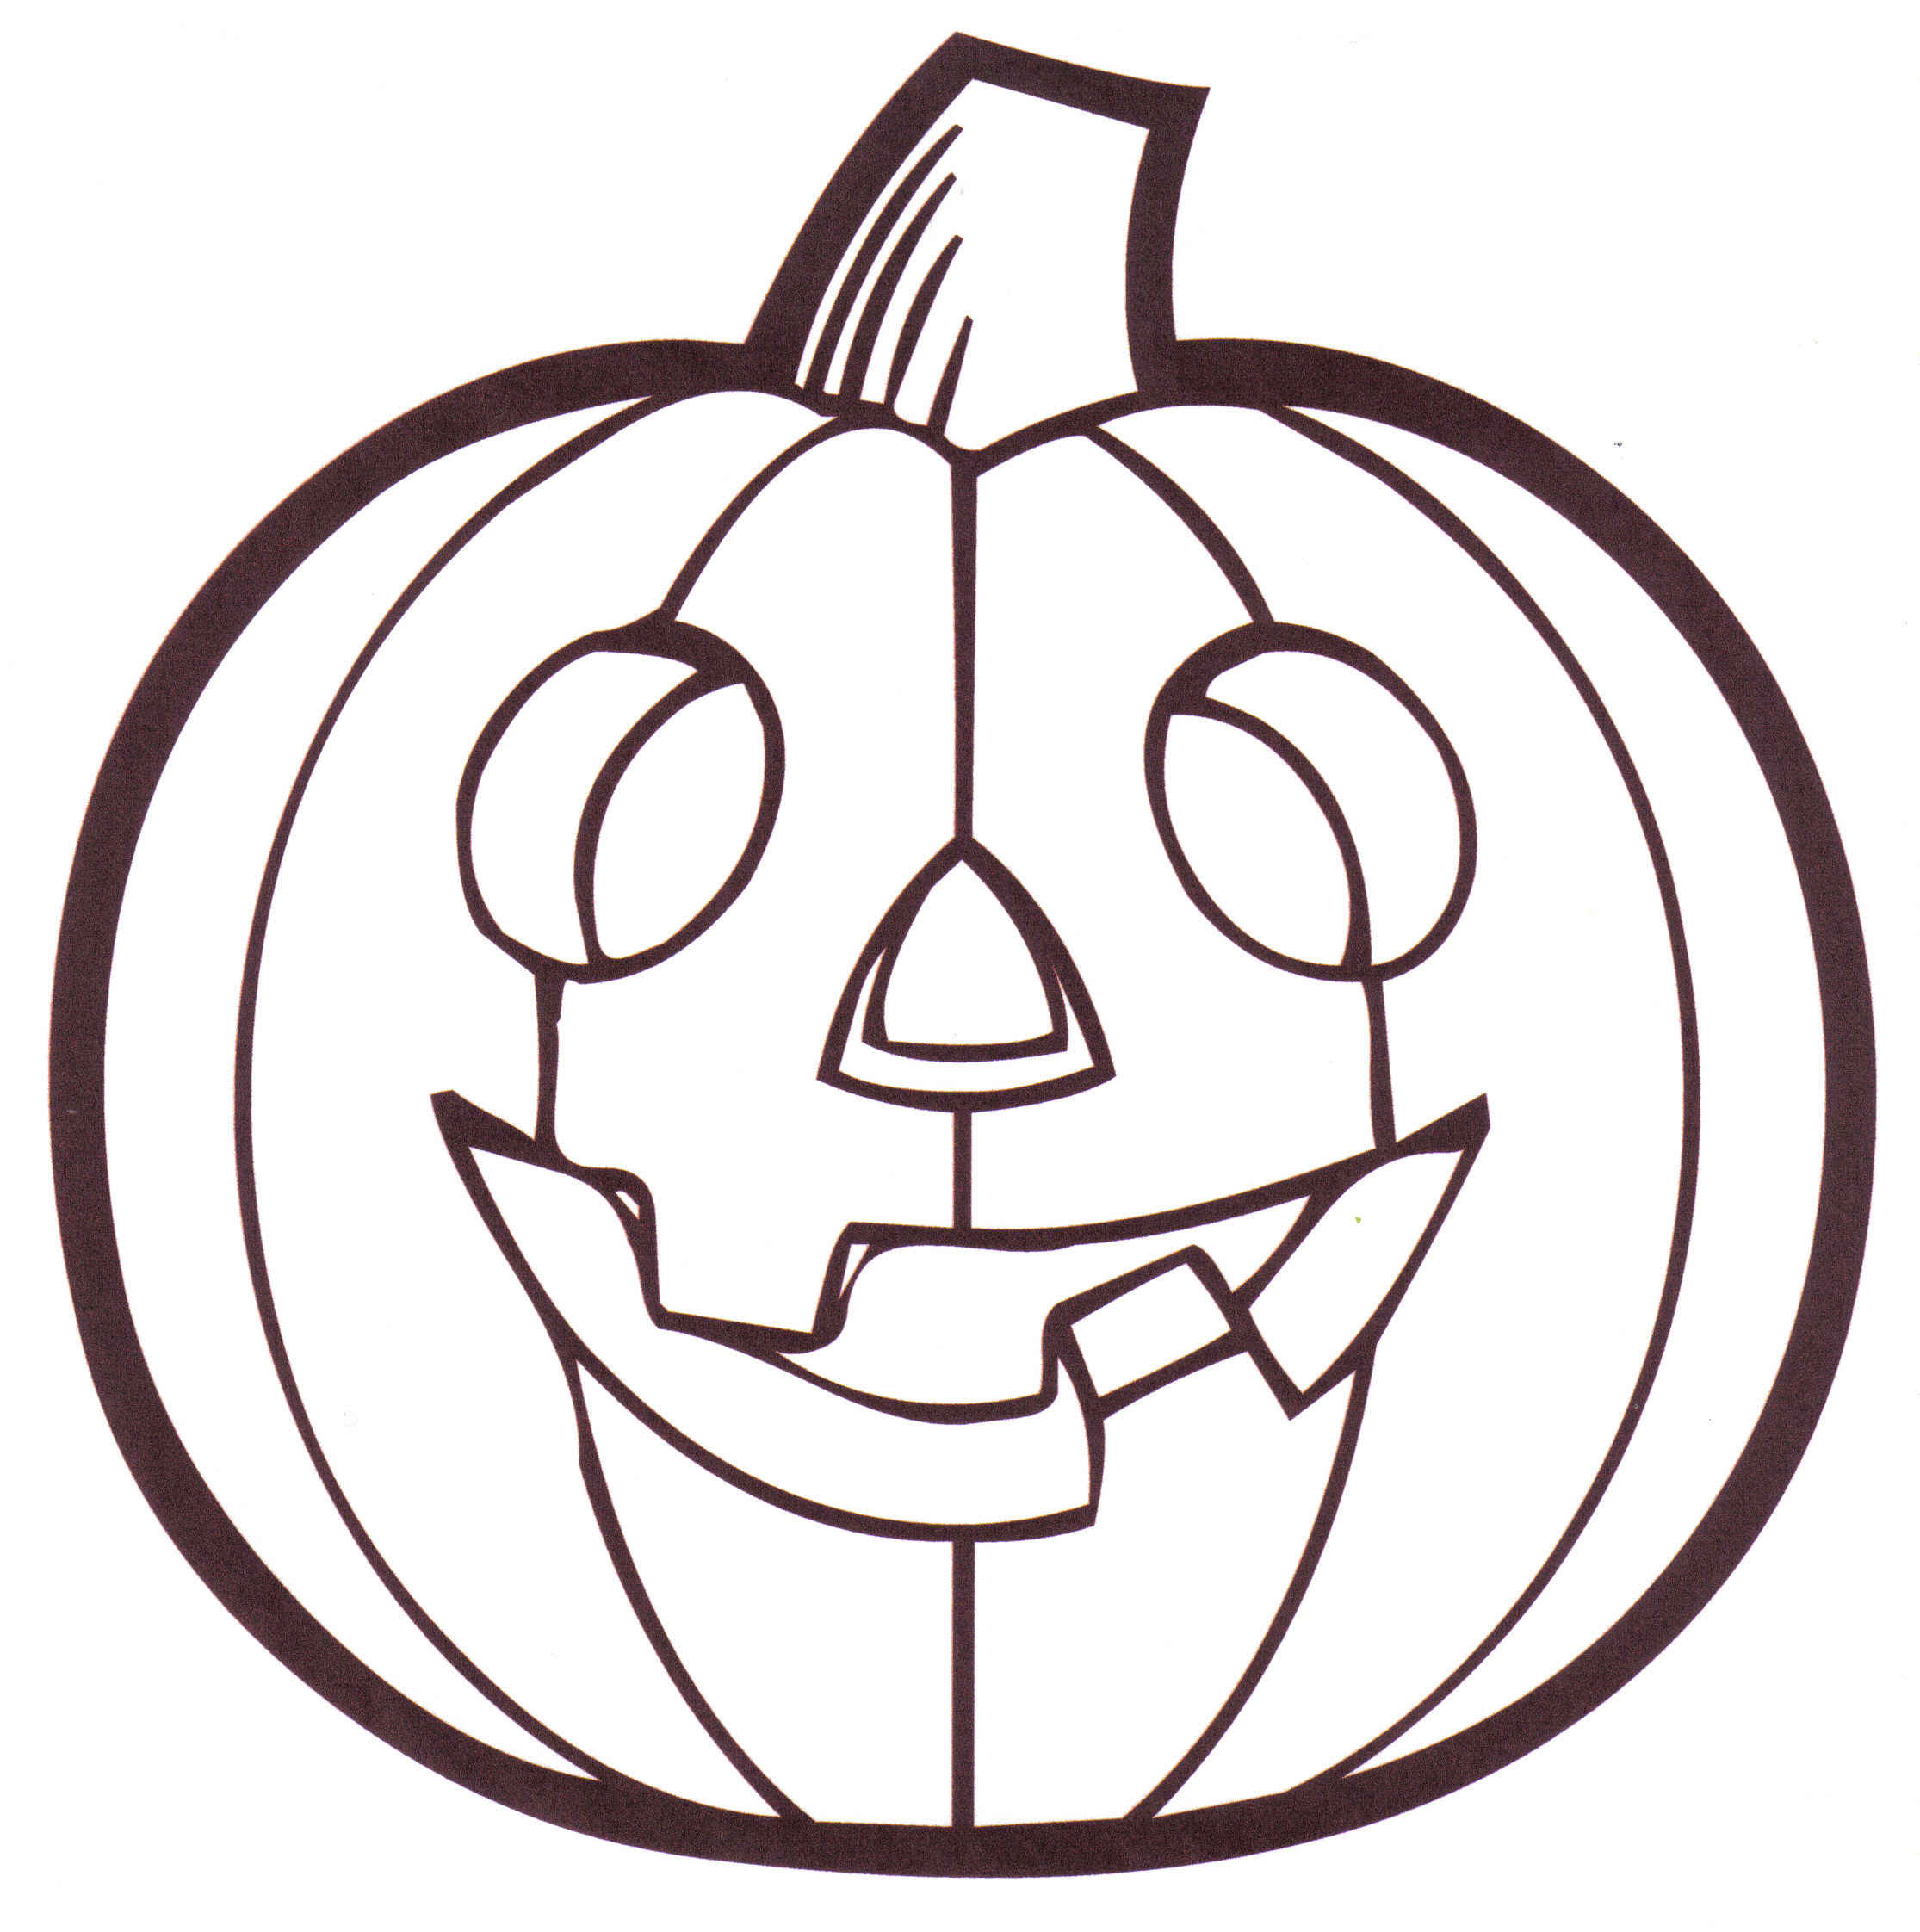 free-pumpkin-line-drawing-download-free-pumpkin-line-drawing-png